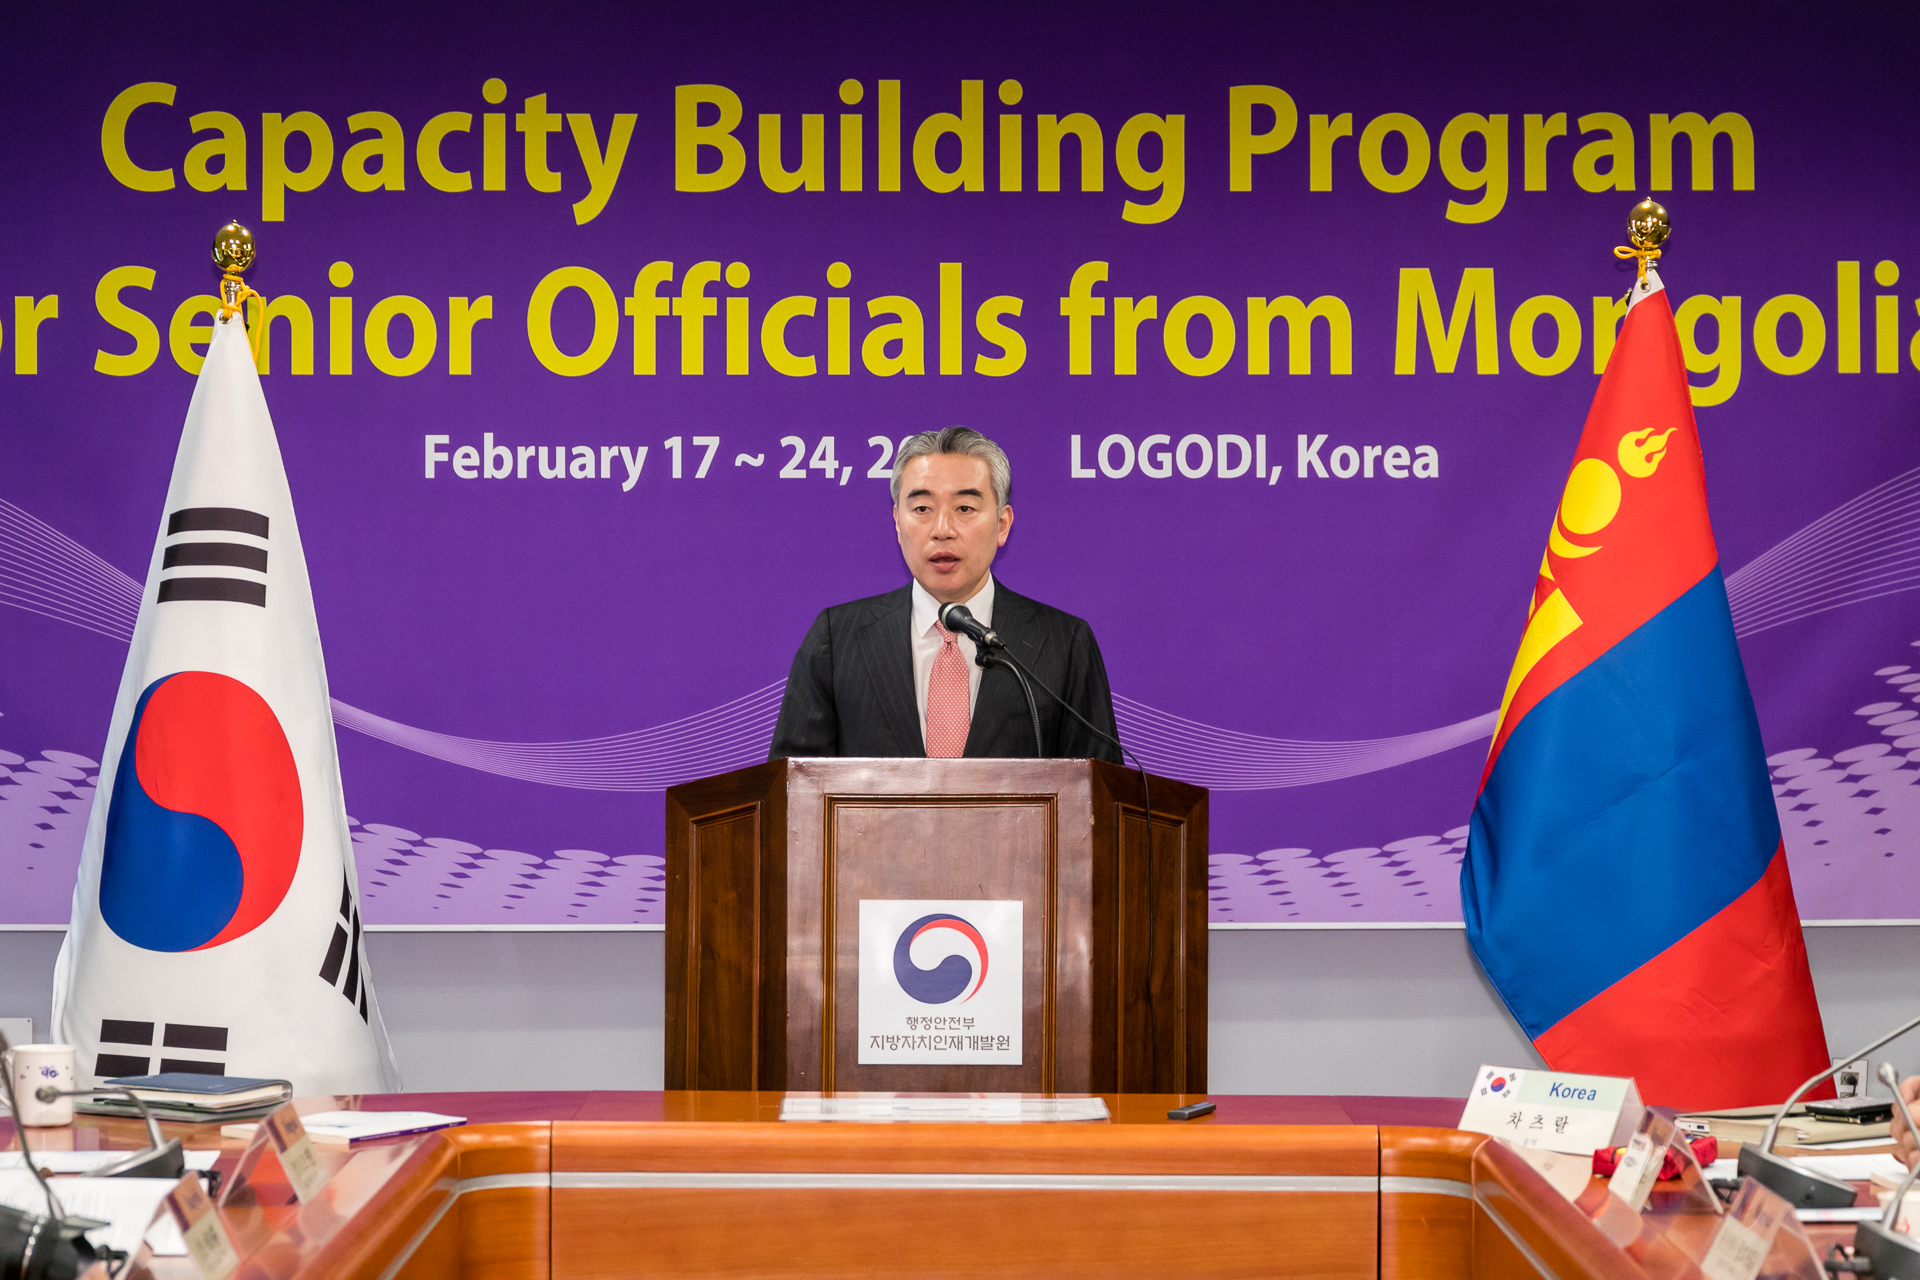 Mongolian officials share Korea's experiences in Local Tourism Development